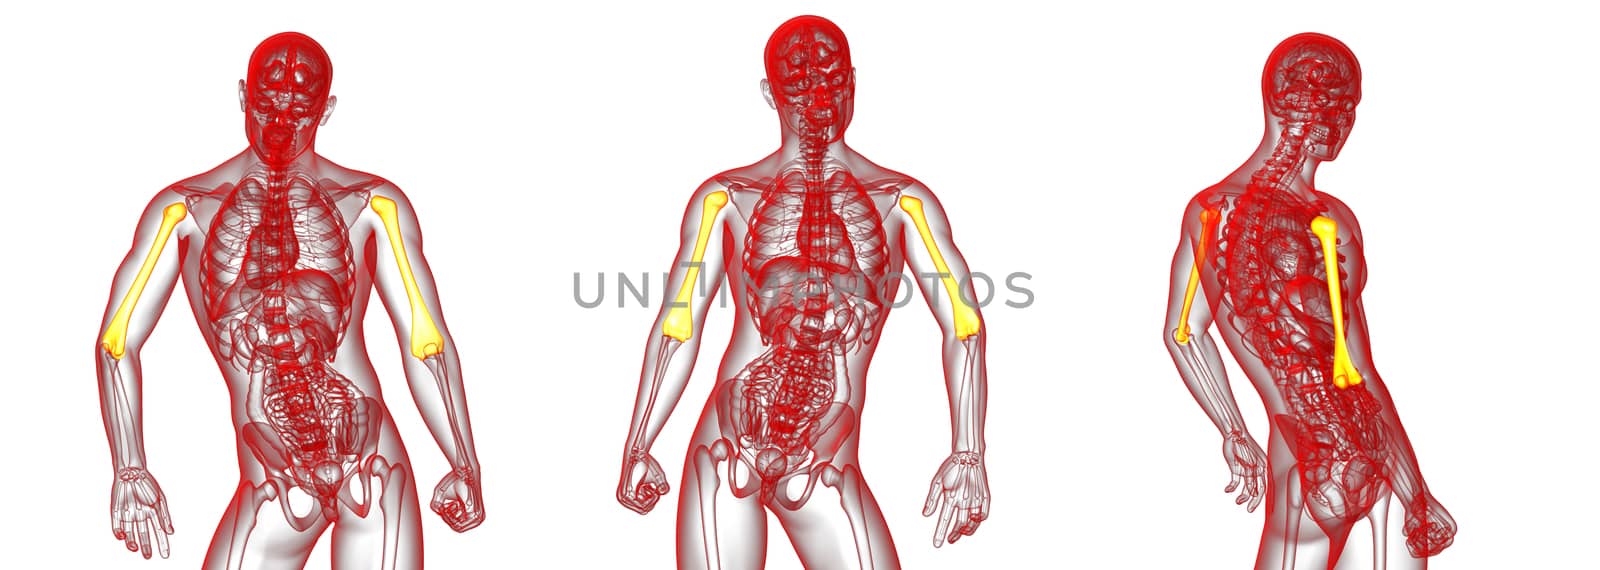 3d rendering medical illustration of the humerus bone